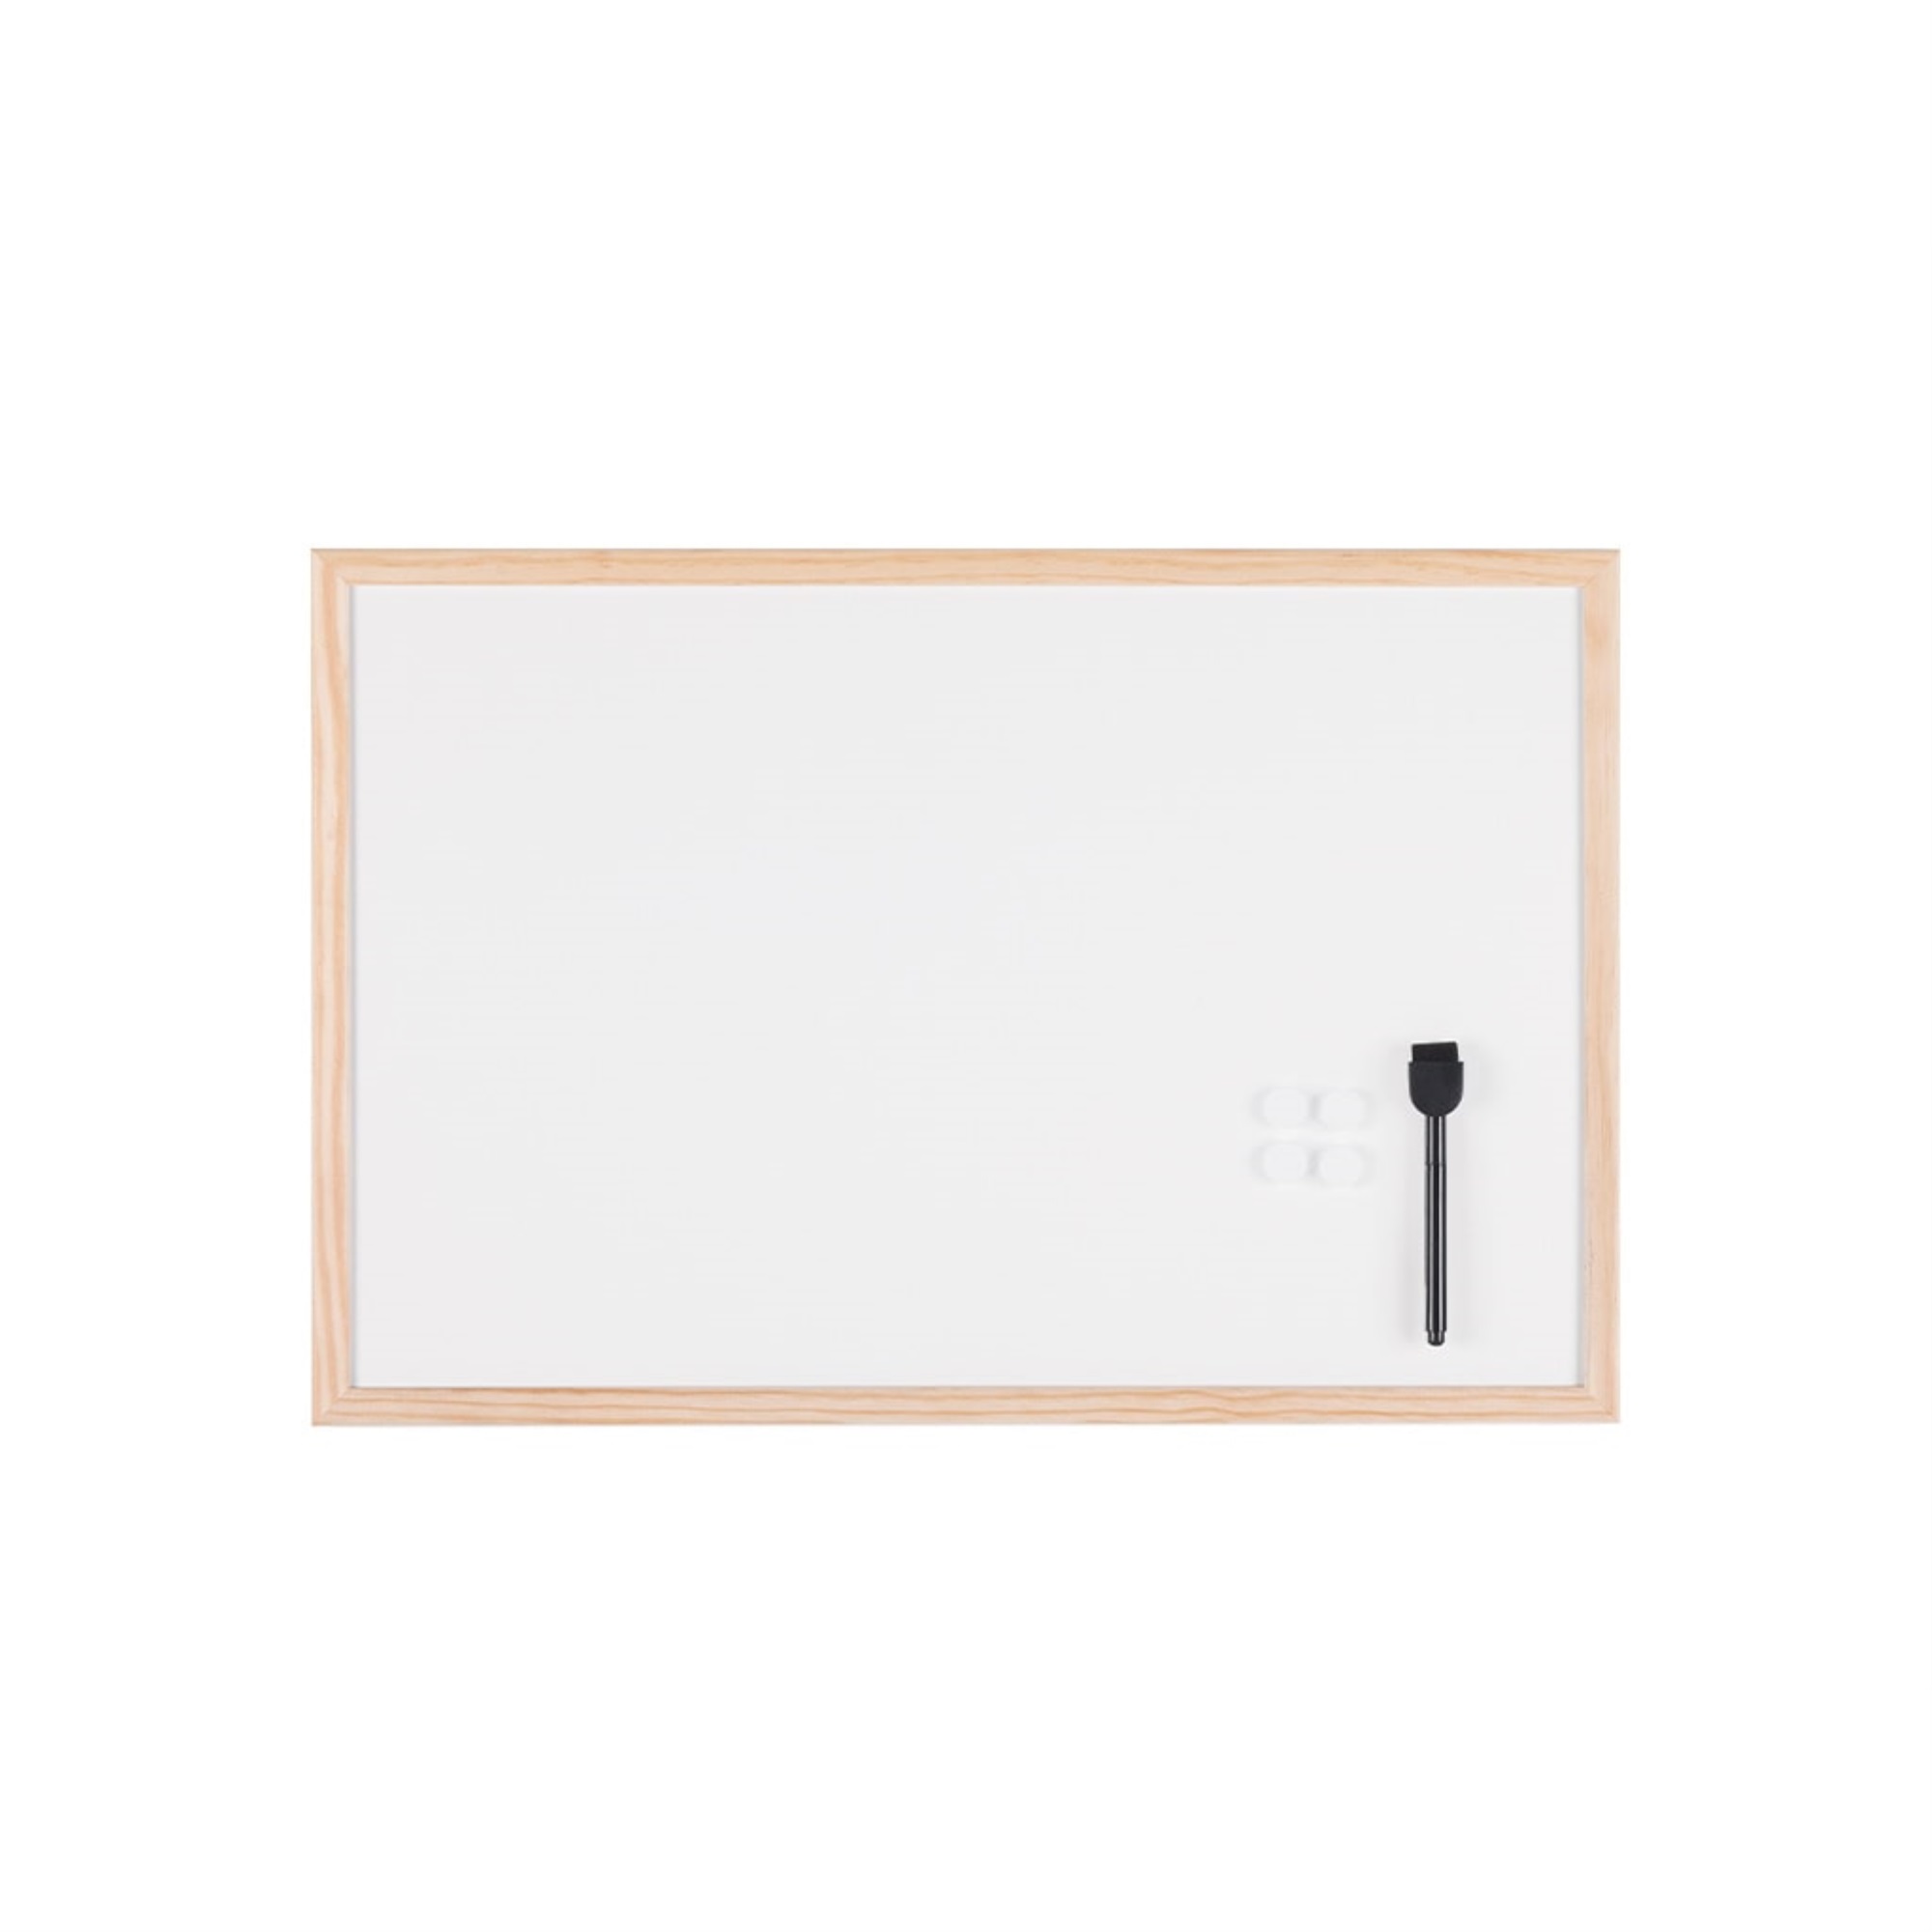 Mastervision Magnetic Dry-erase Board, Pine Wood Frame